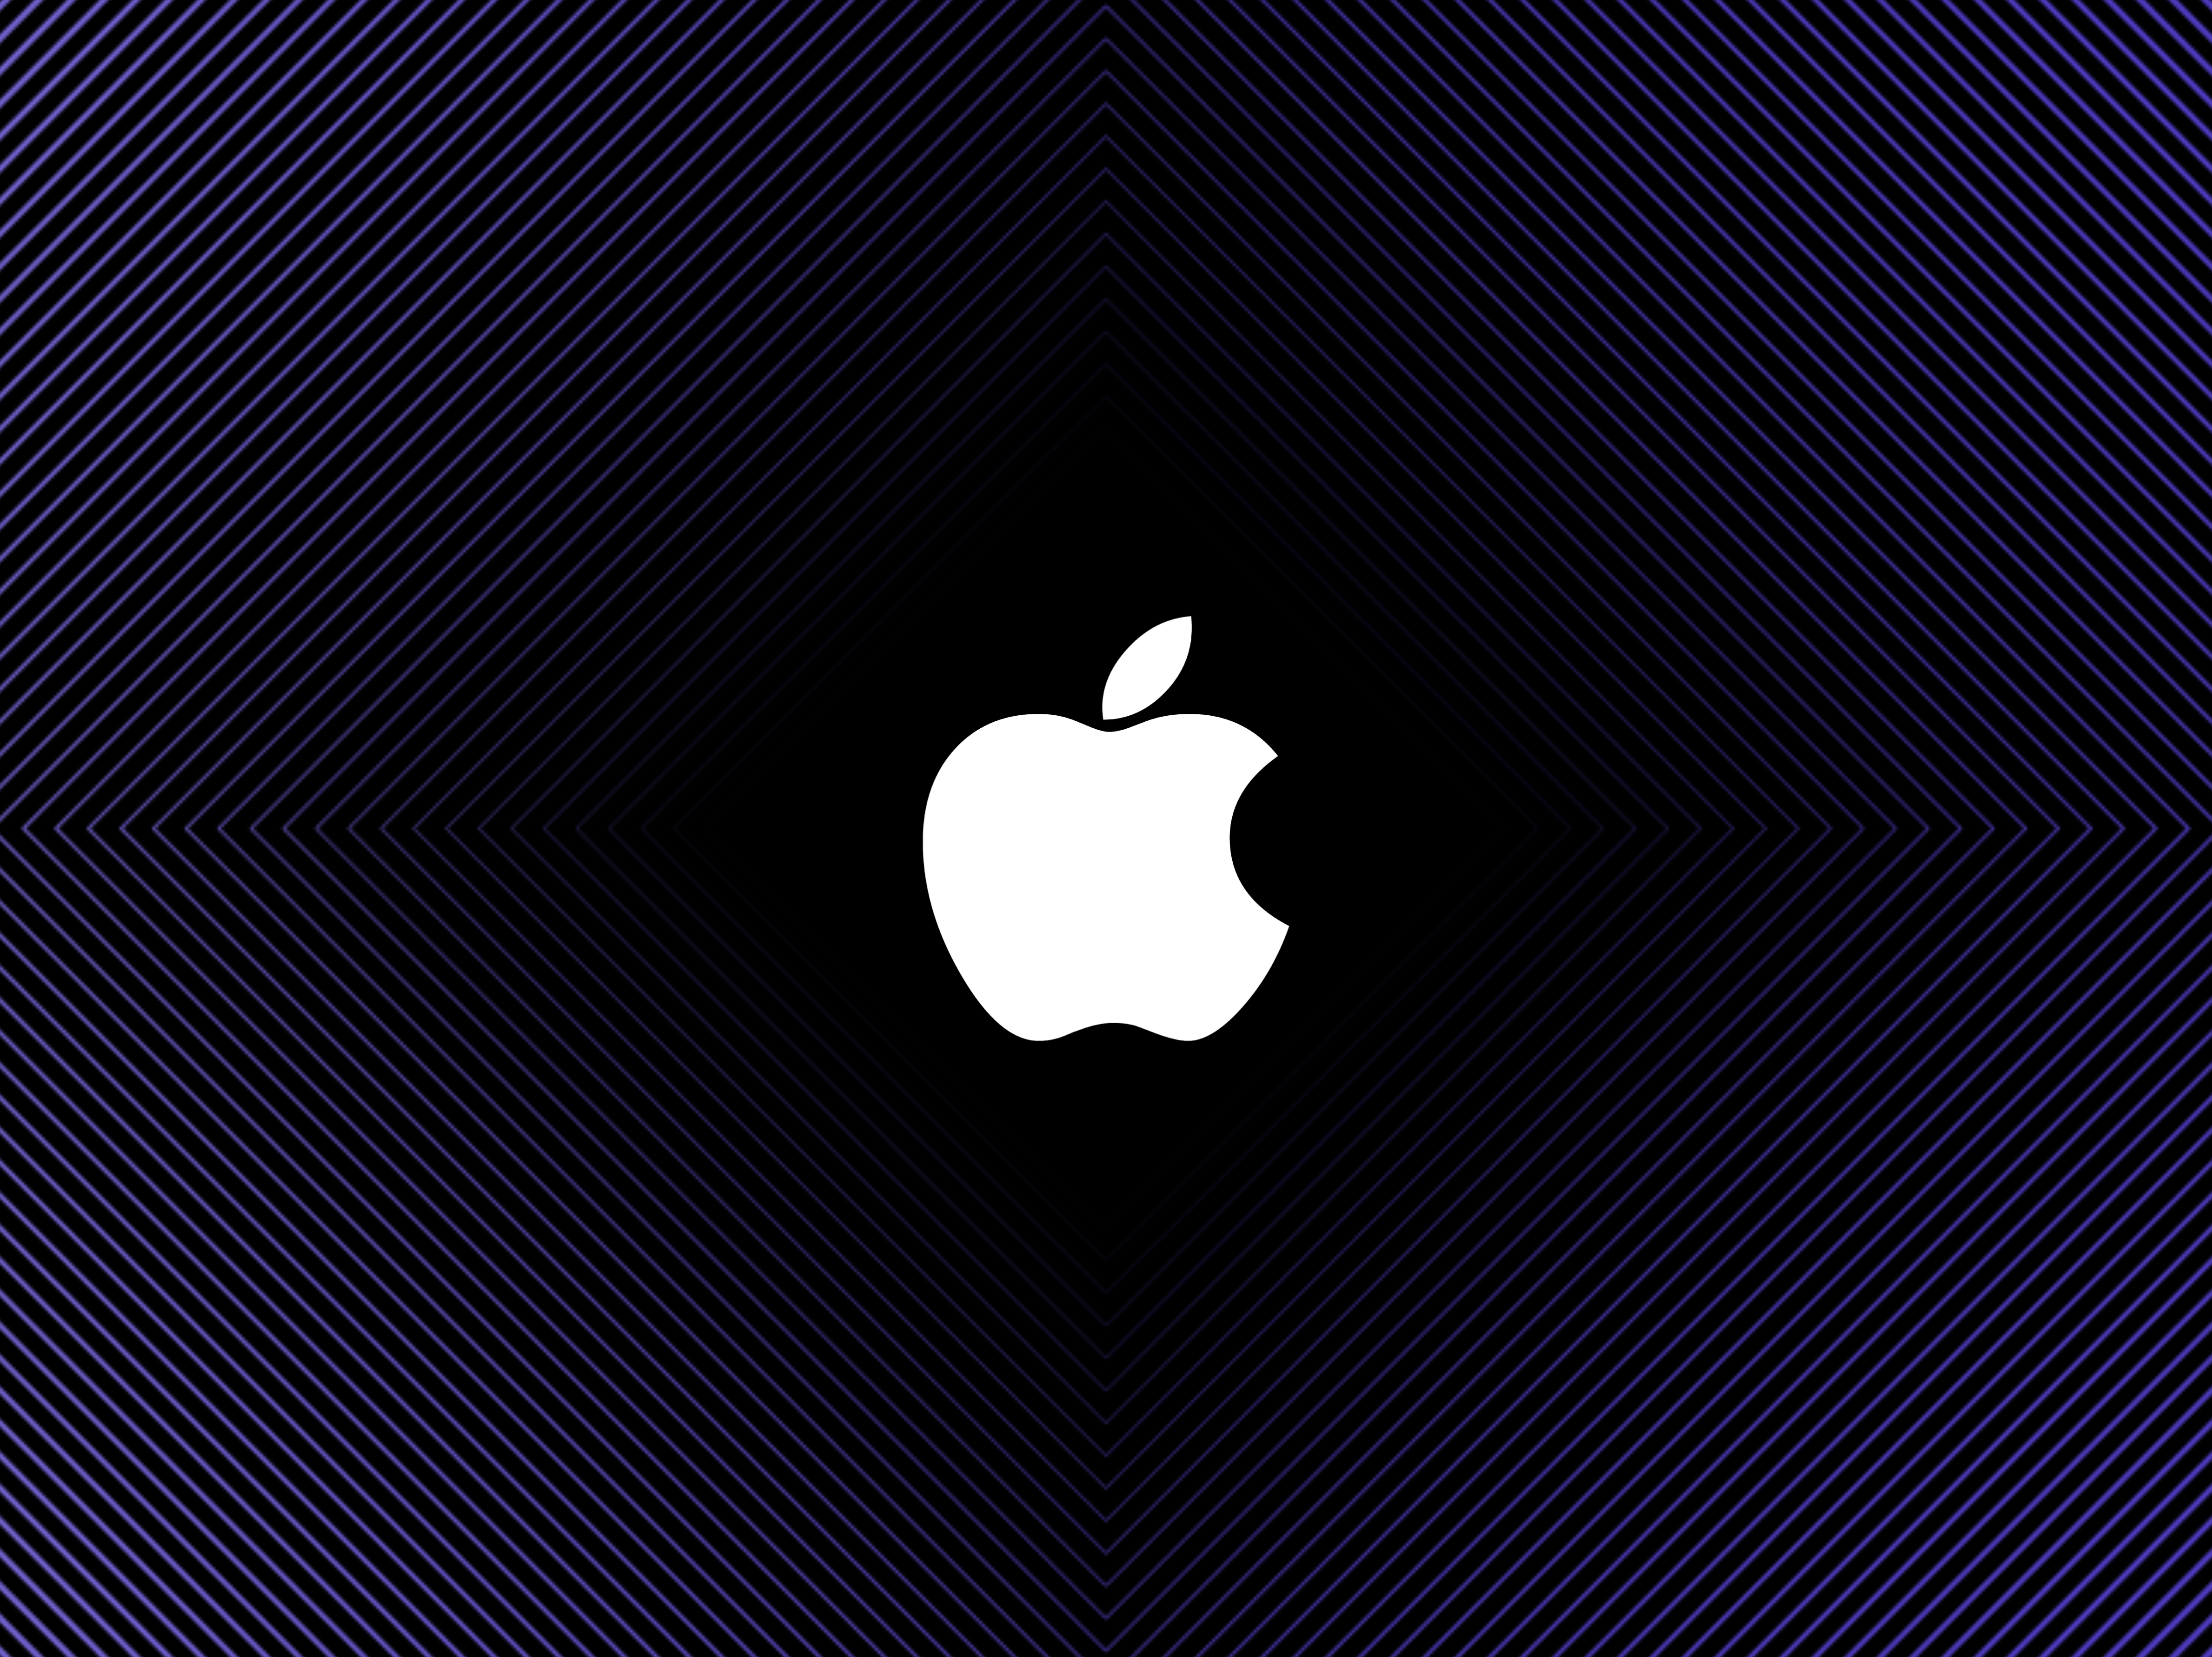 Apple’s WWDC21 | iOS 15, iPadOS 15, macOS 12 Monterey and more